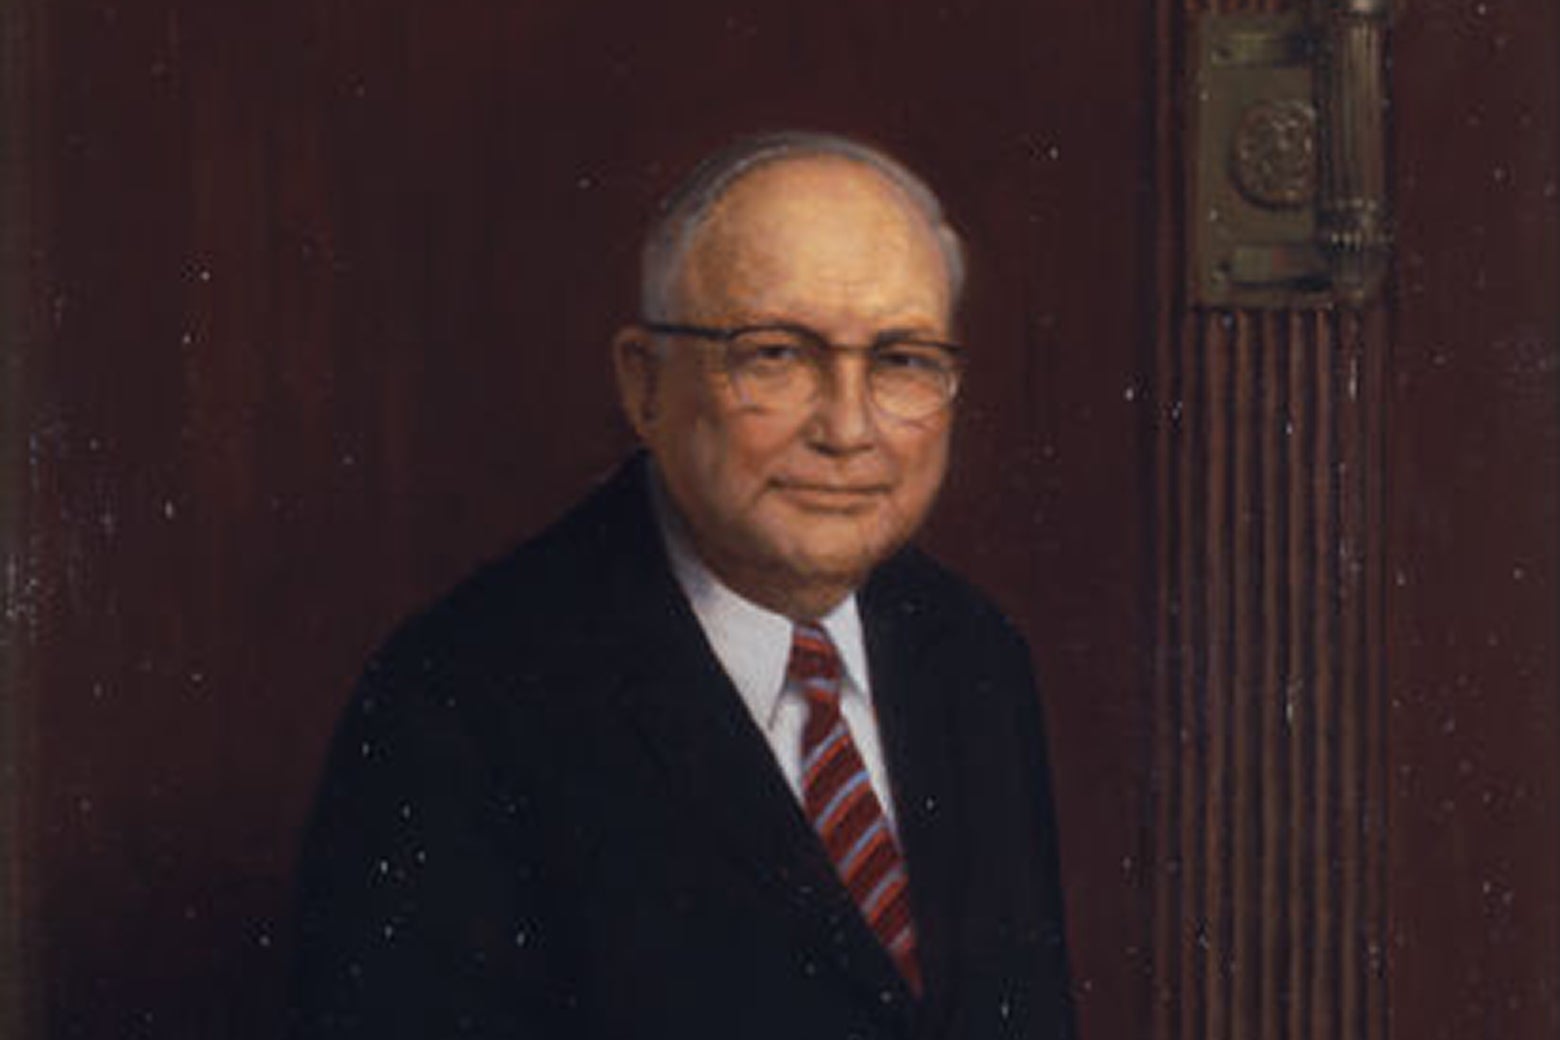 The official portrait of Senator Eastland.